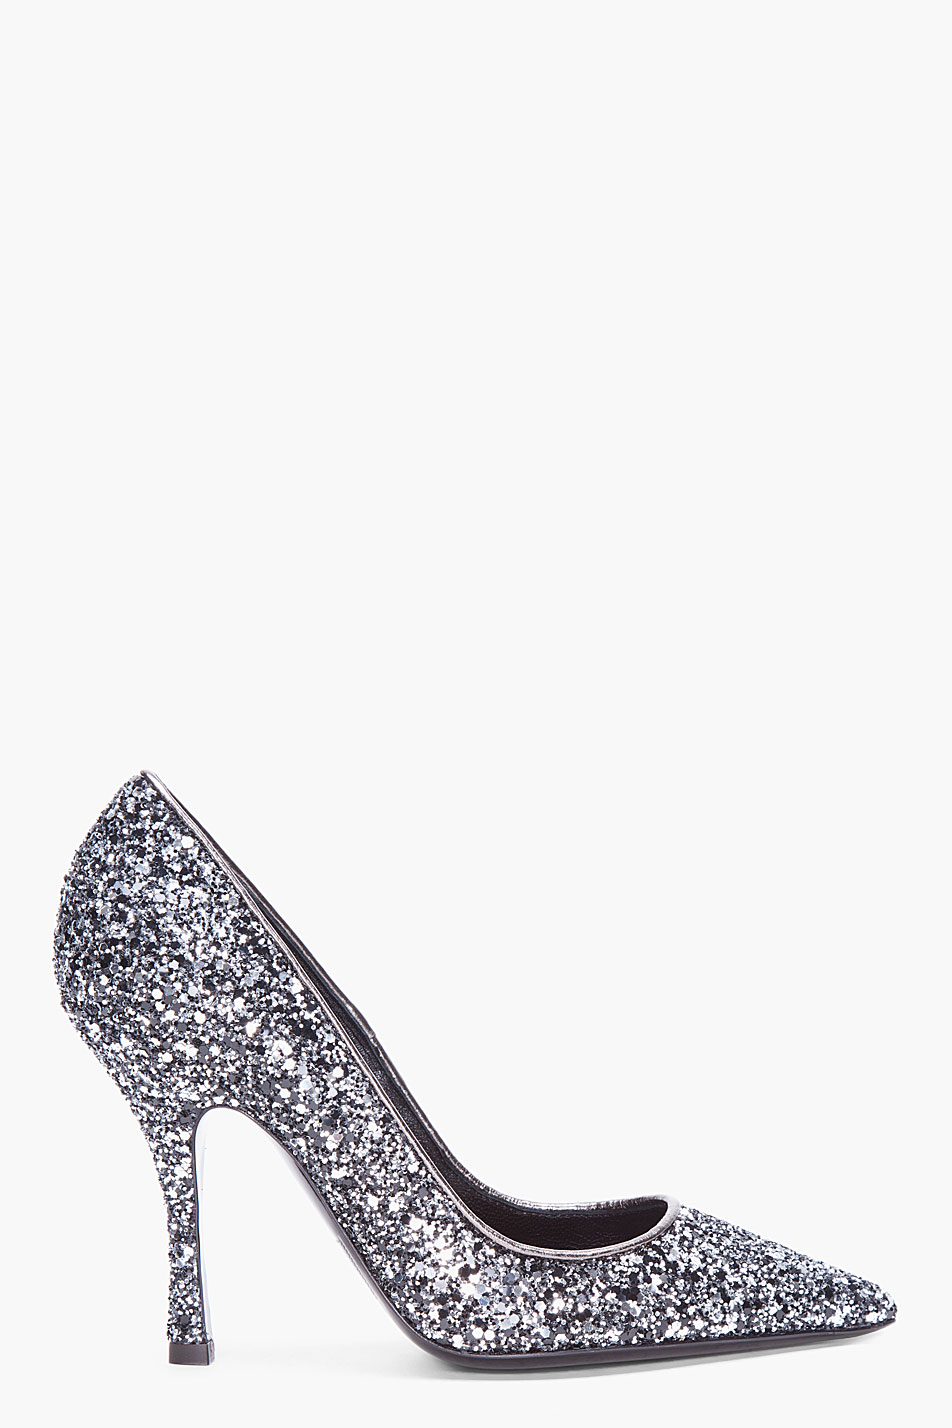 Dsquared² Silver Tiffany Glitter Heels in Silver | Lyst